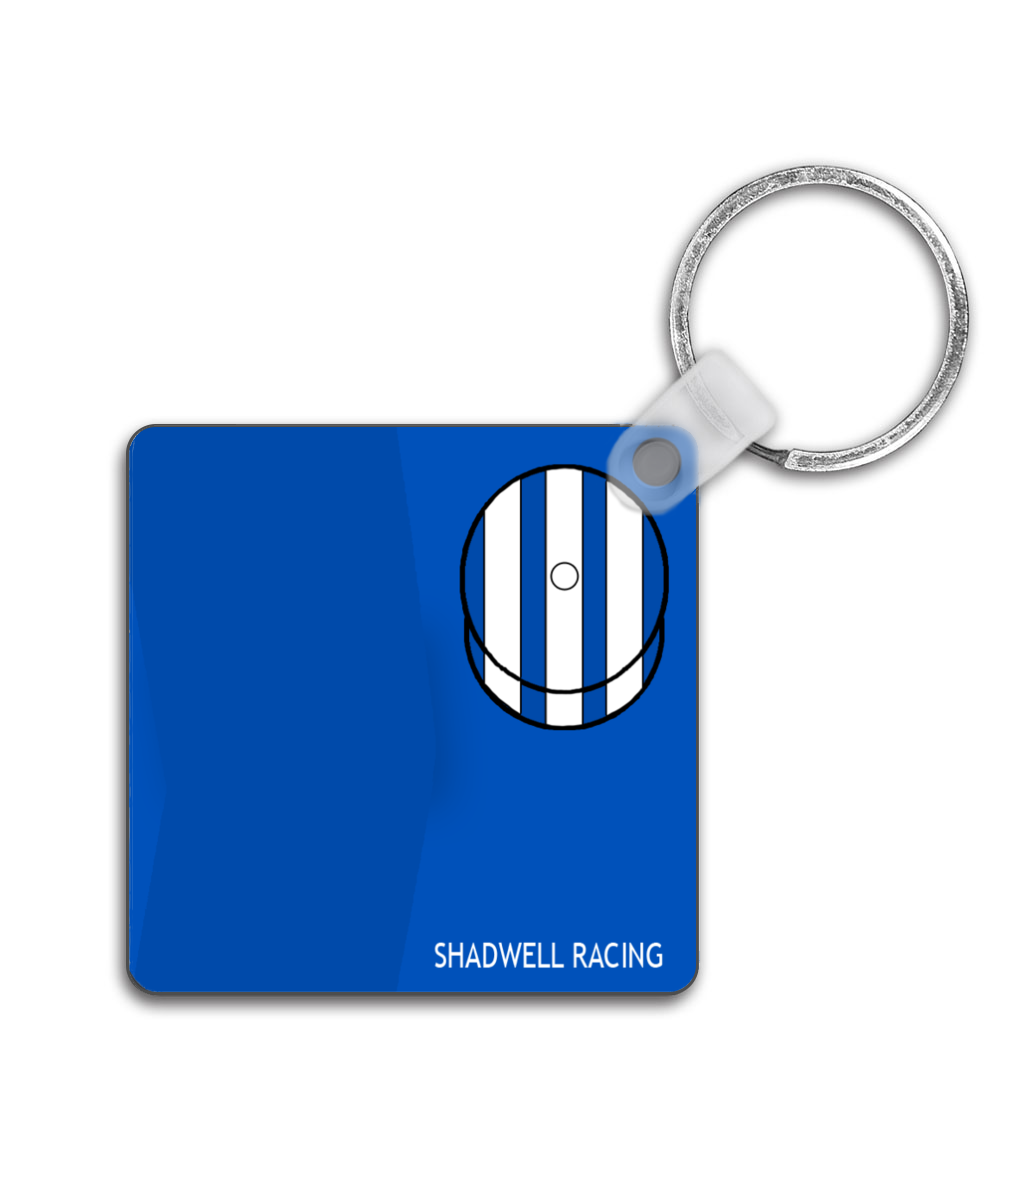 Shadwell Racing - Doppelseitiger Schlüsselanhänger